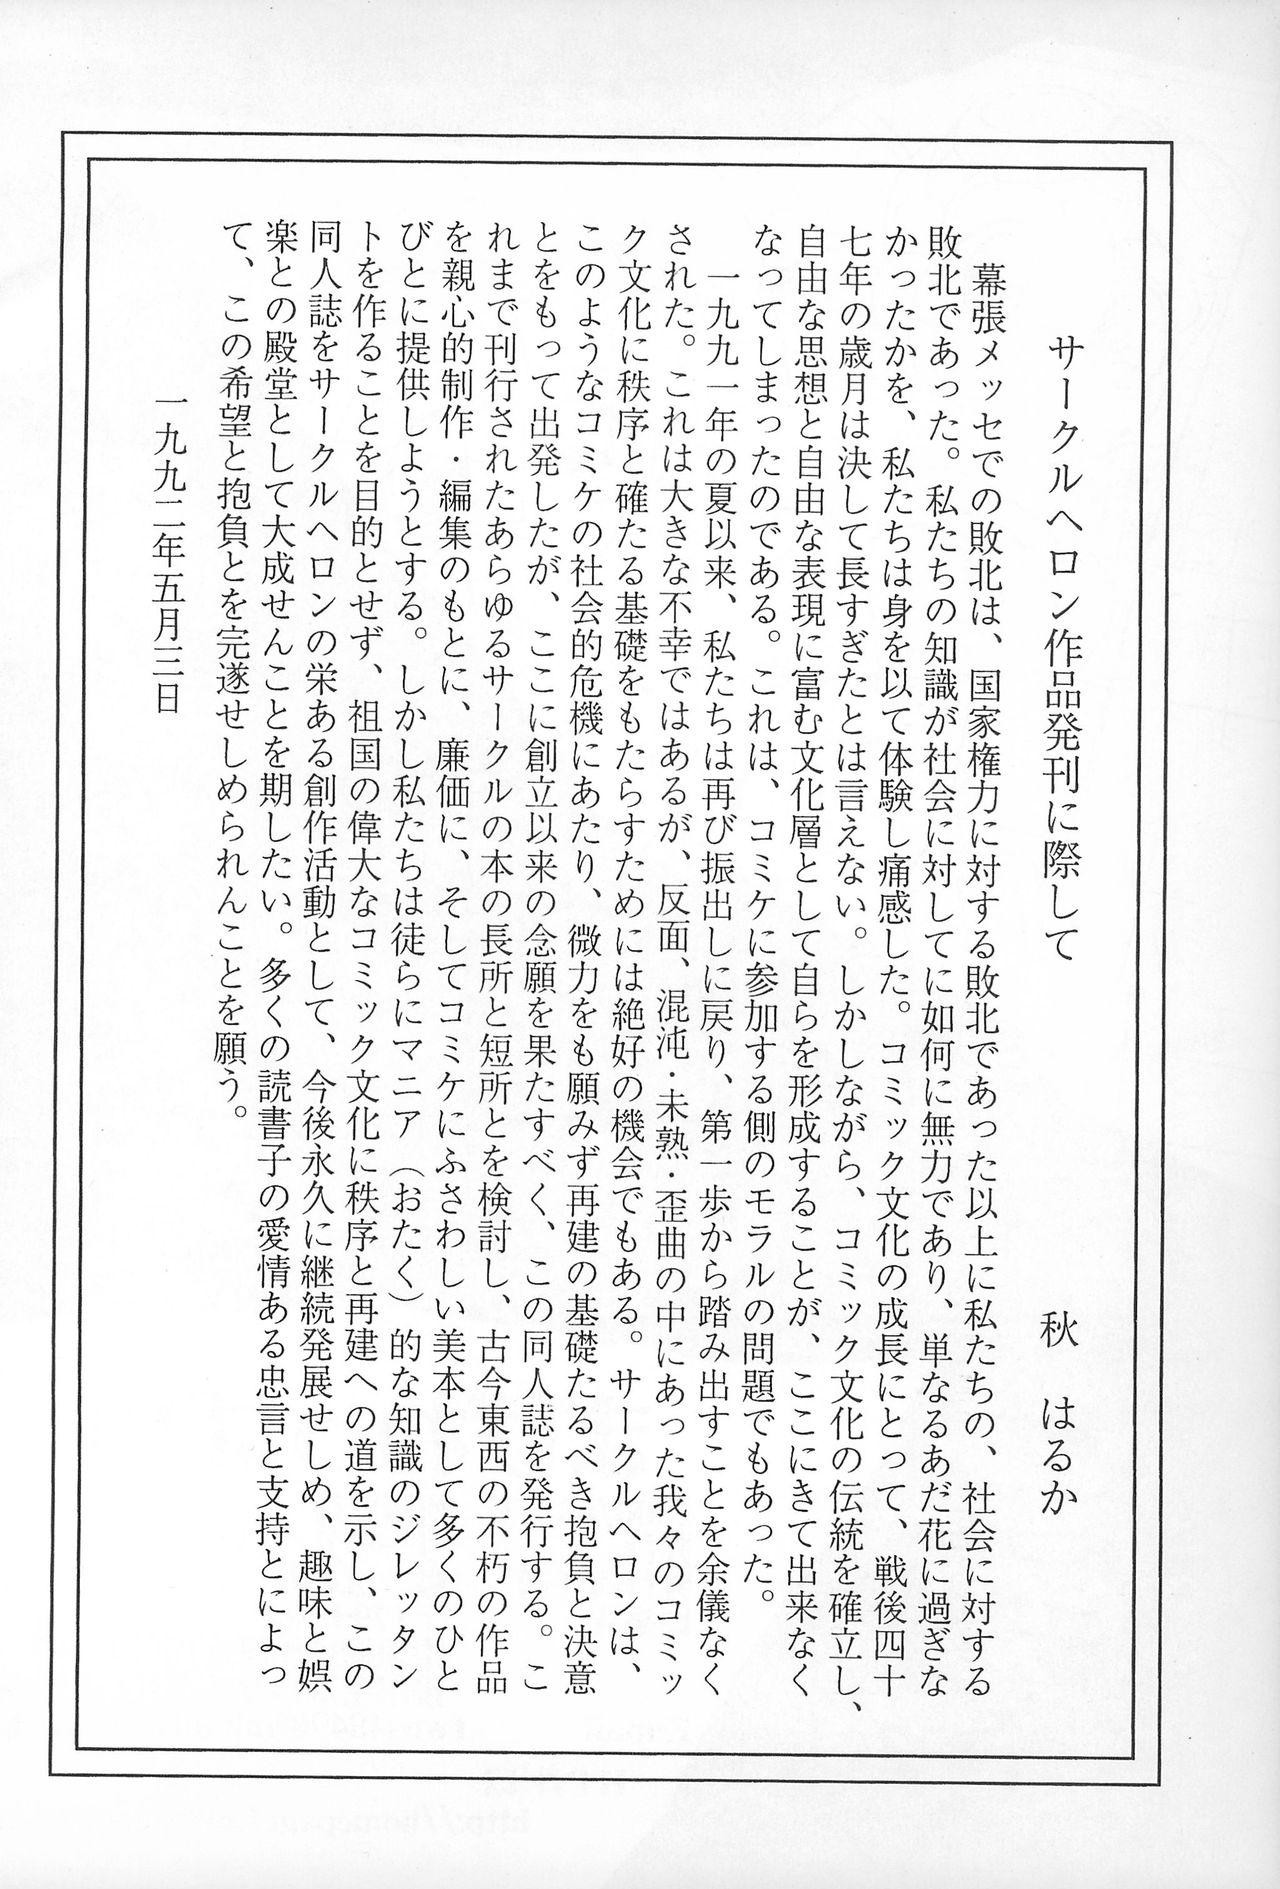 Perra Rokushin Gattai - Magewappa 13 - Mon colle knights Moaning - Page 53